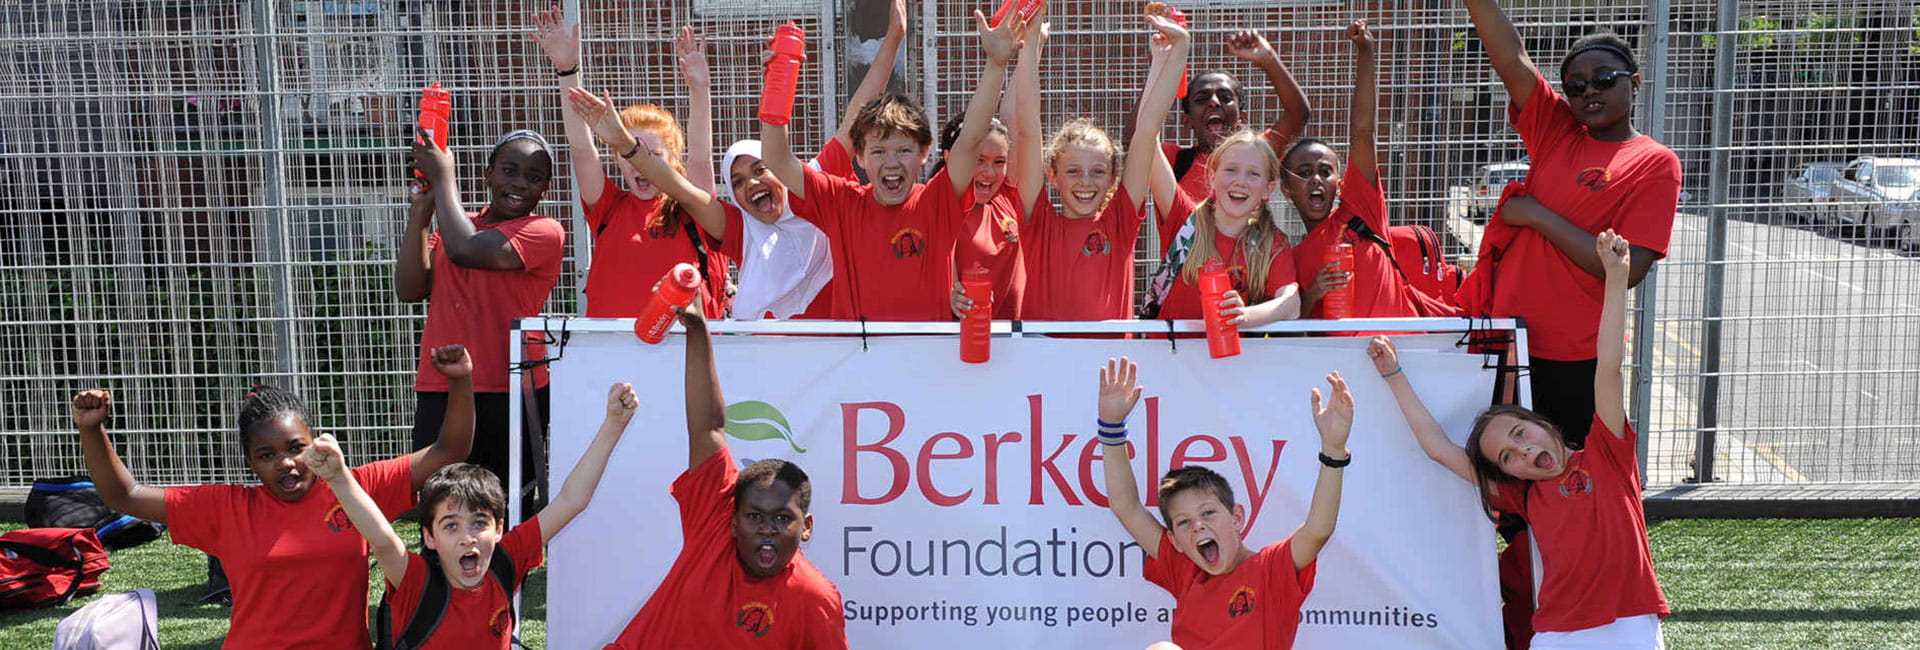 Berkeley Foundation - About Us